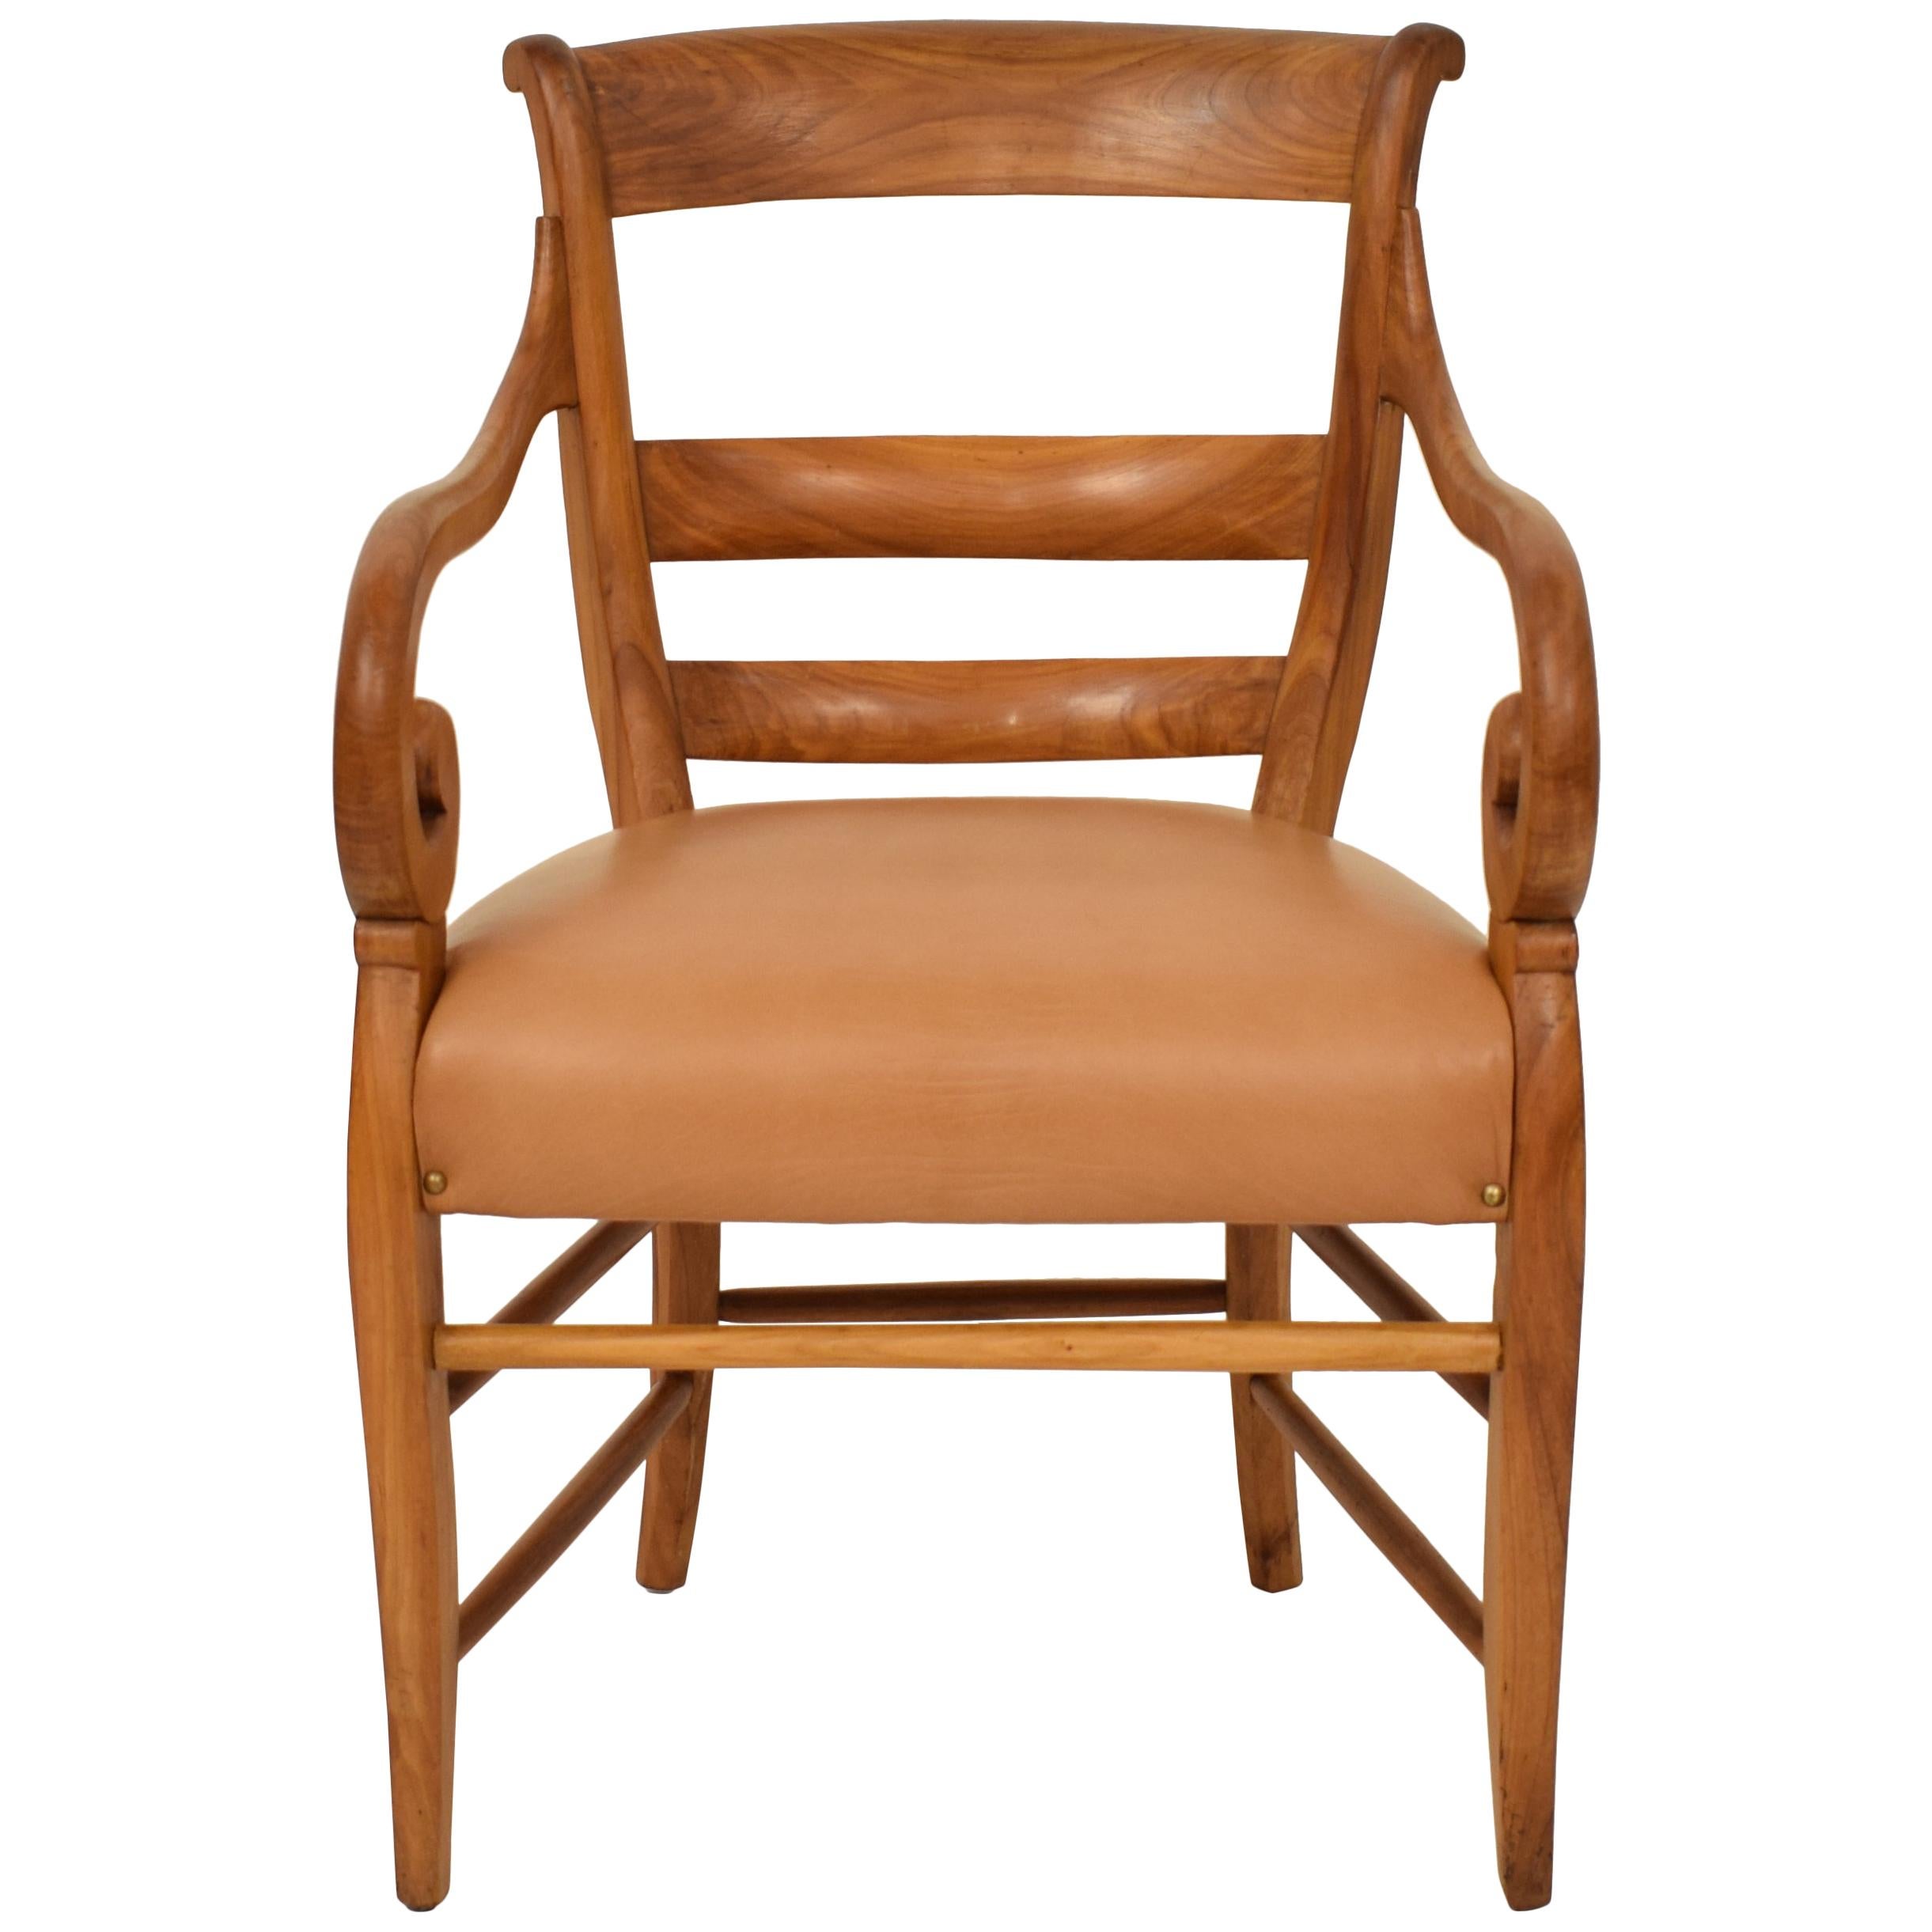 19th Century German Cherrywood Biedermeier Armchair with Brown Leather Seat